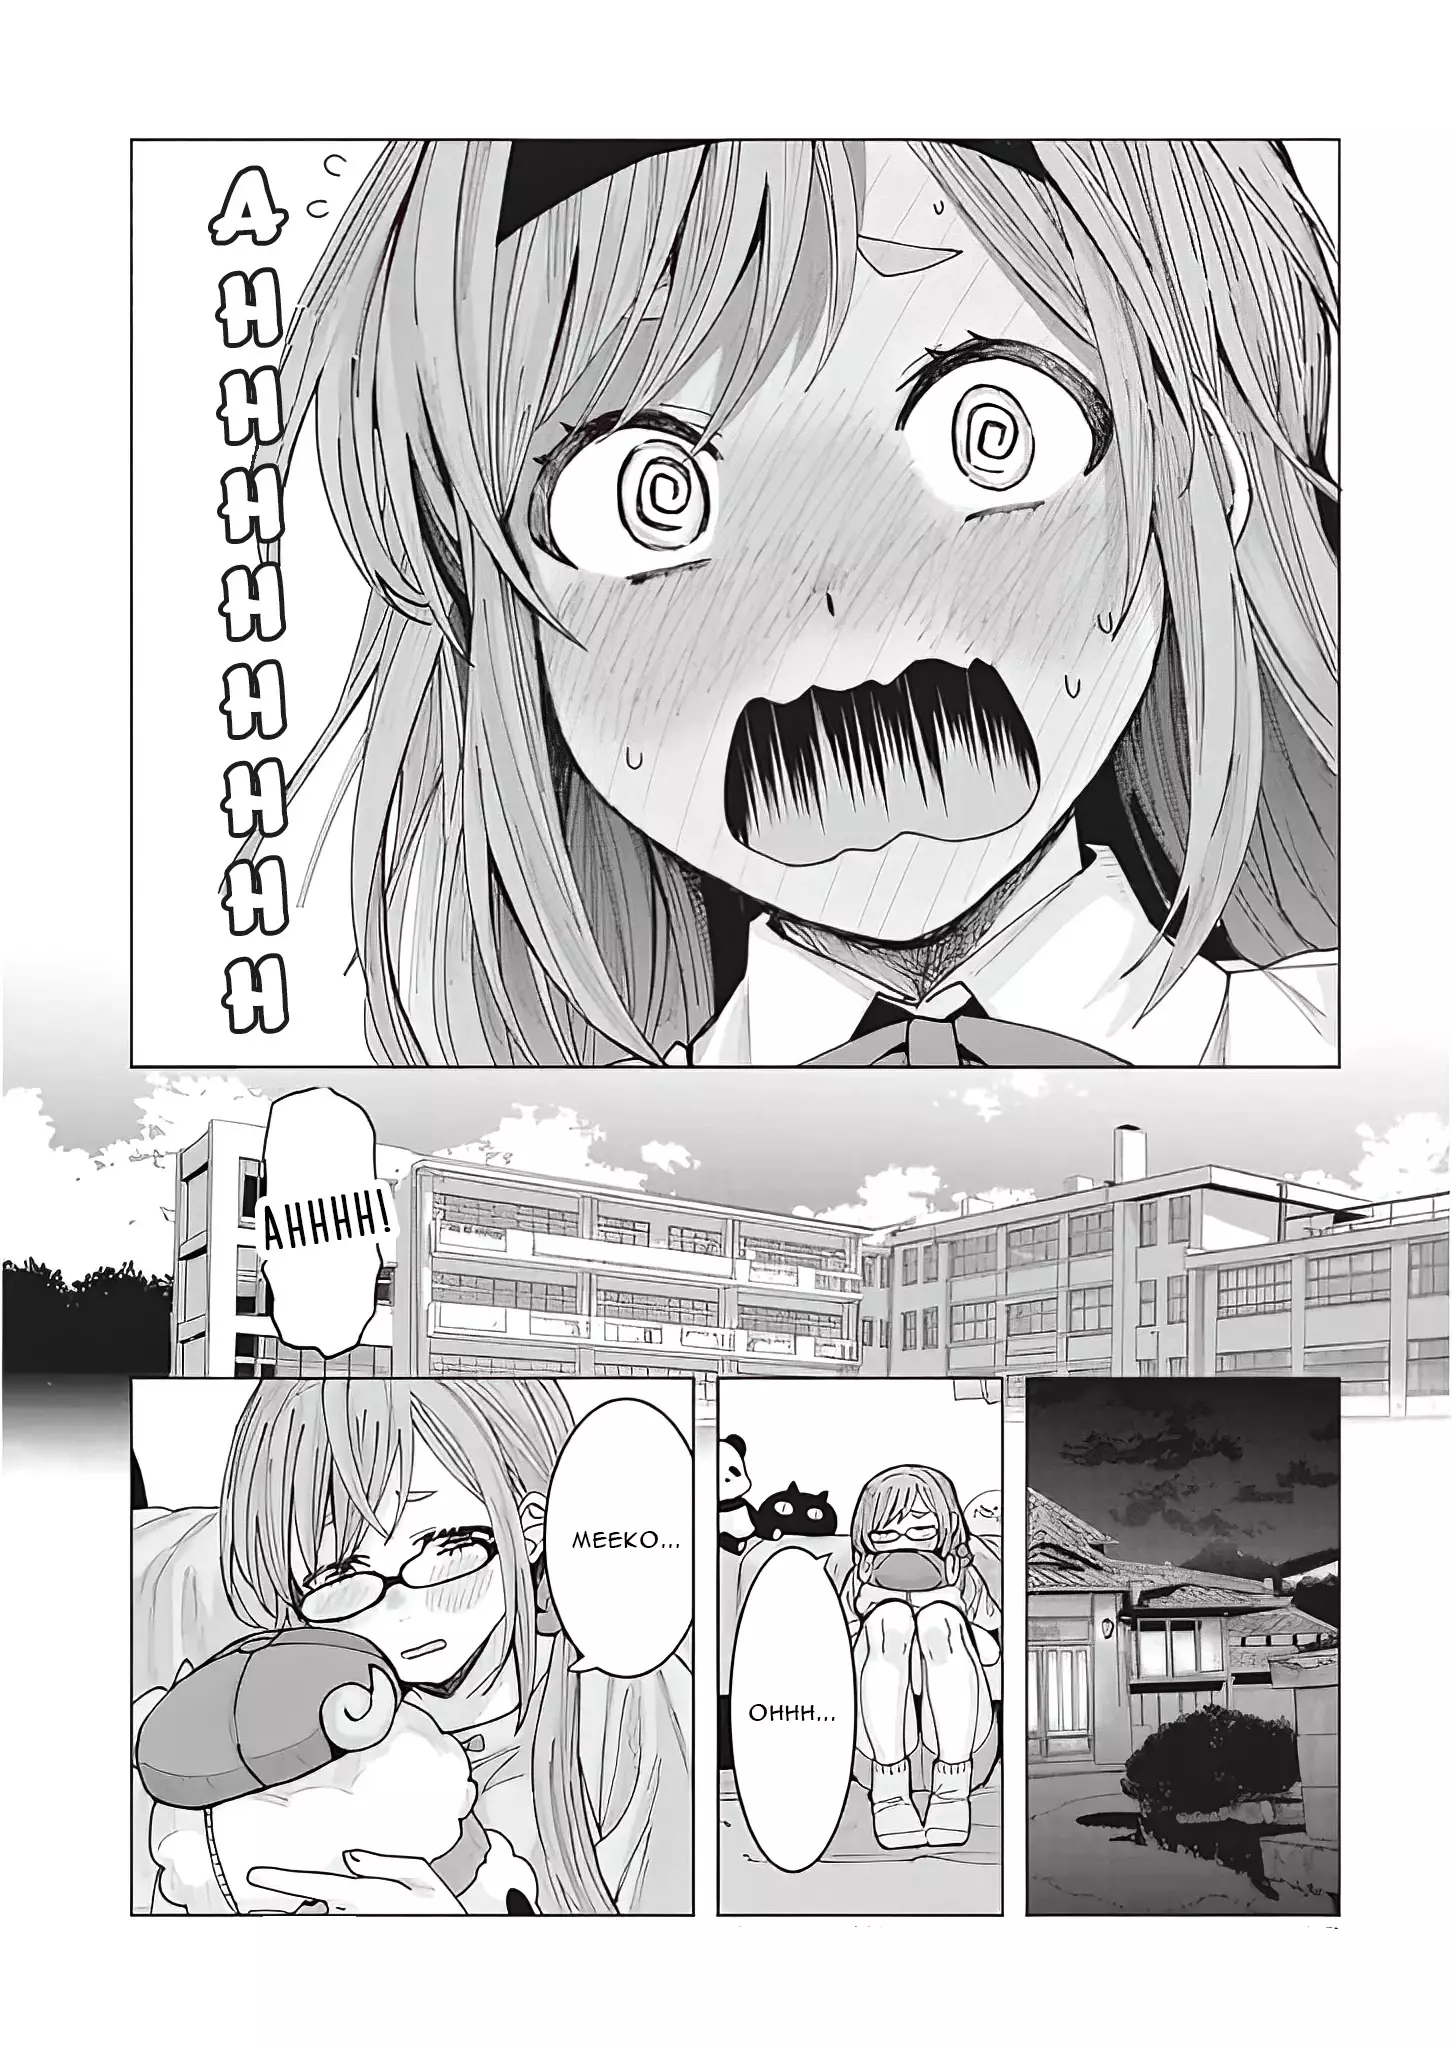 "nobukuni-San" Does She Like Me? - 1 page 15